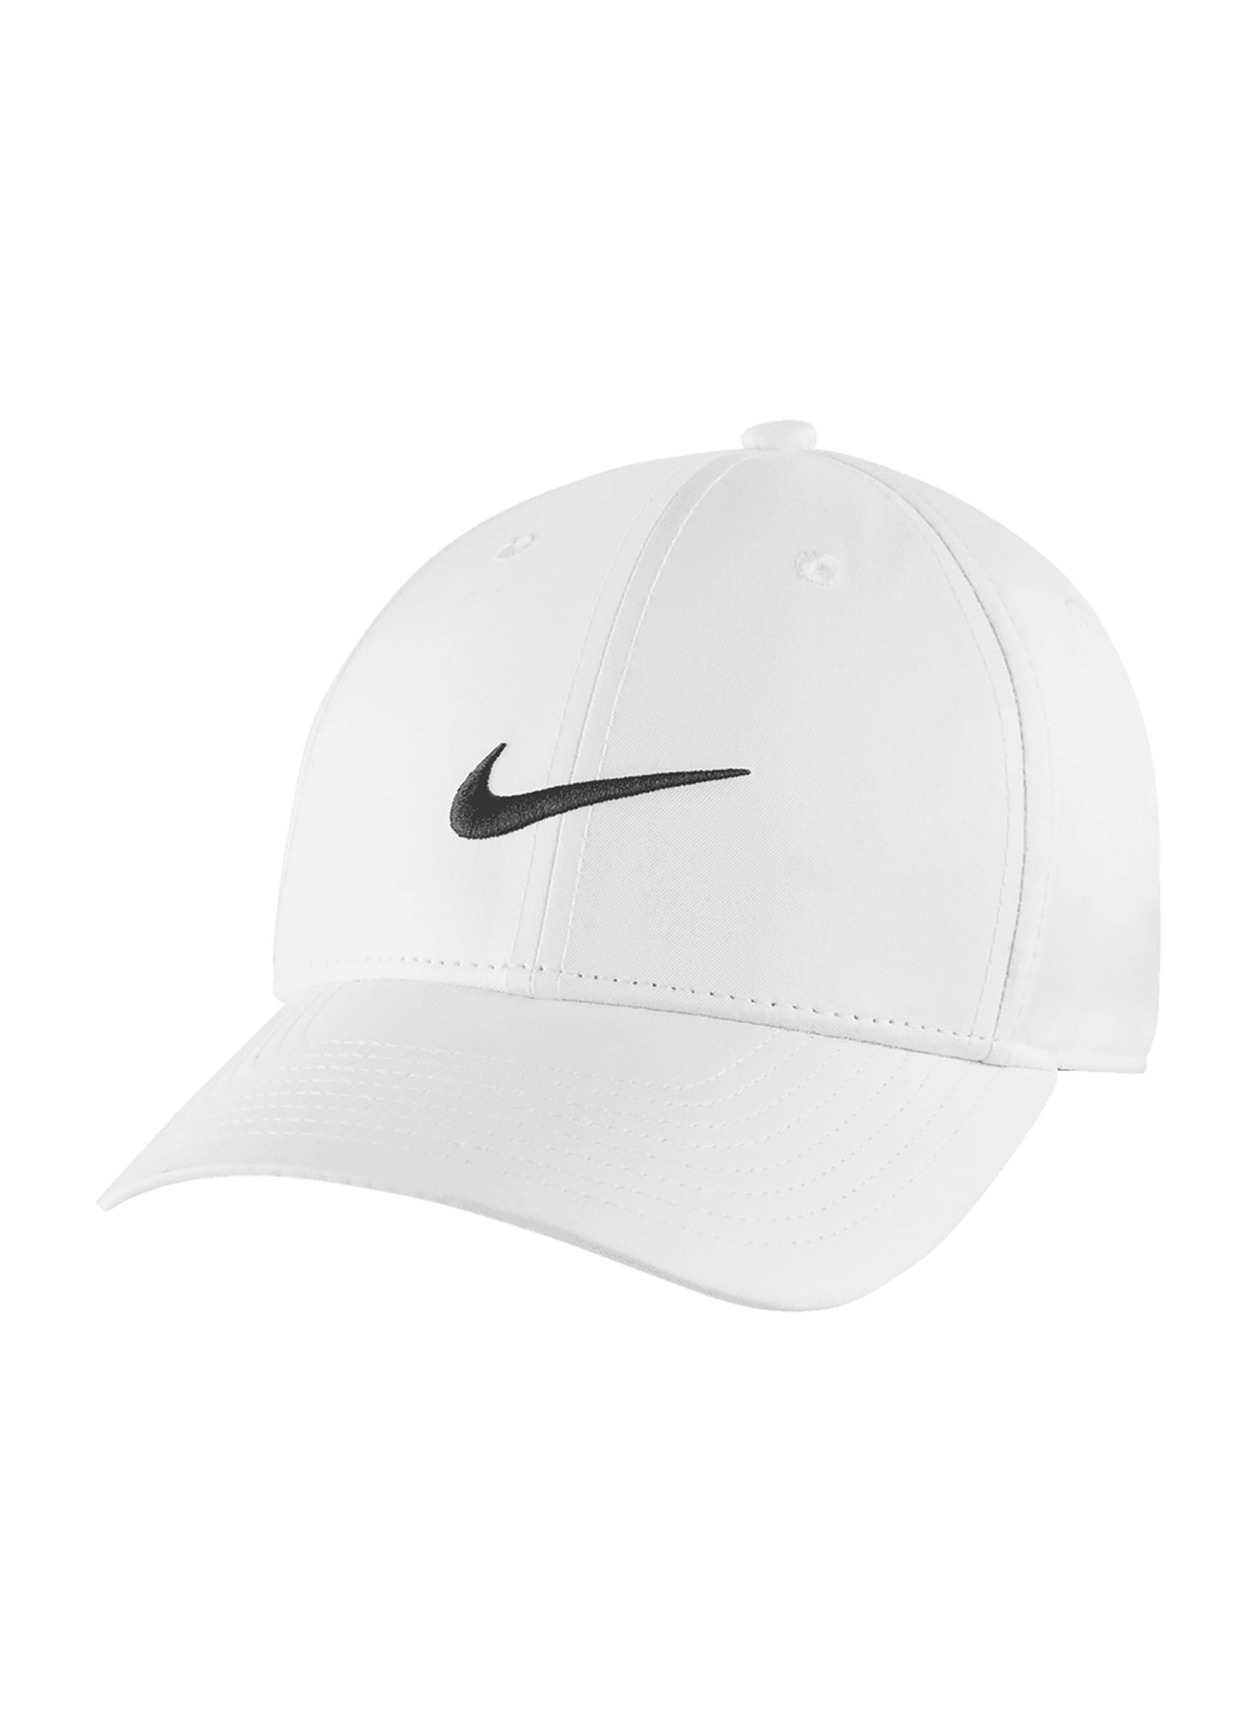 White / Black Nike Dri-FIT Legacy91 Hat | Nike